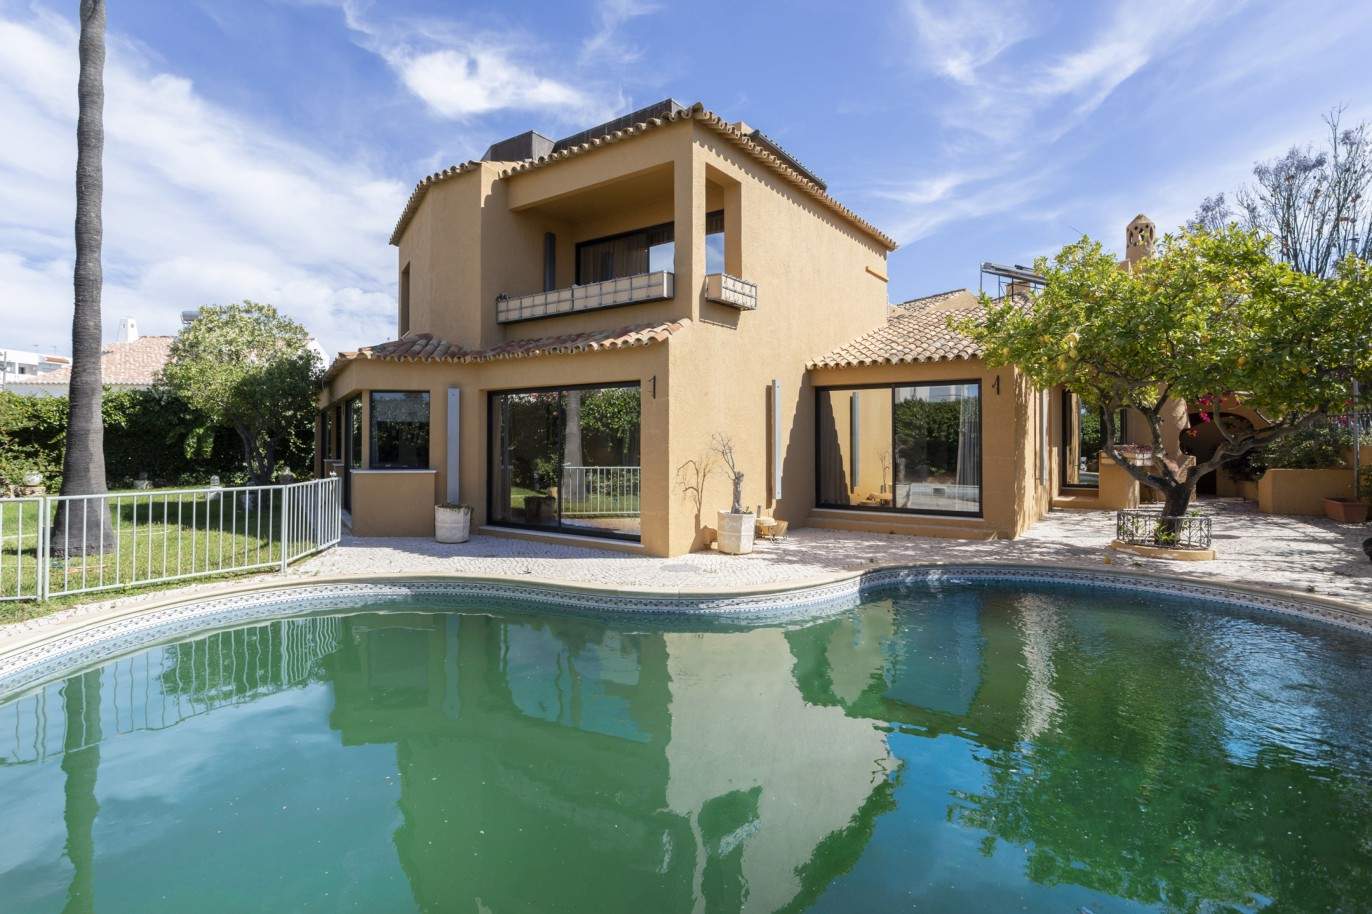 6+4 Bedroom Villa, with swimming pool, for sale, in Albufeira centre, Algarve_201241